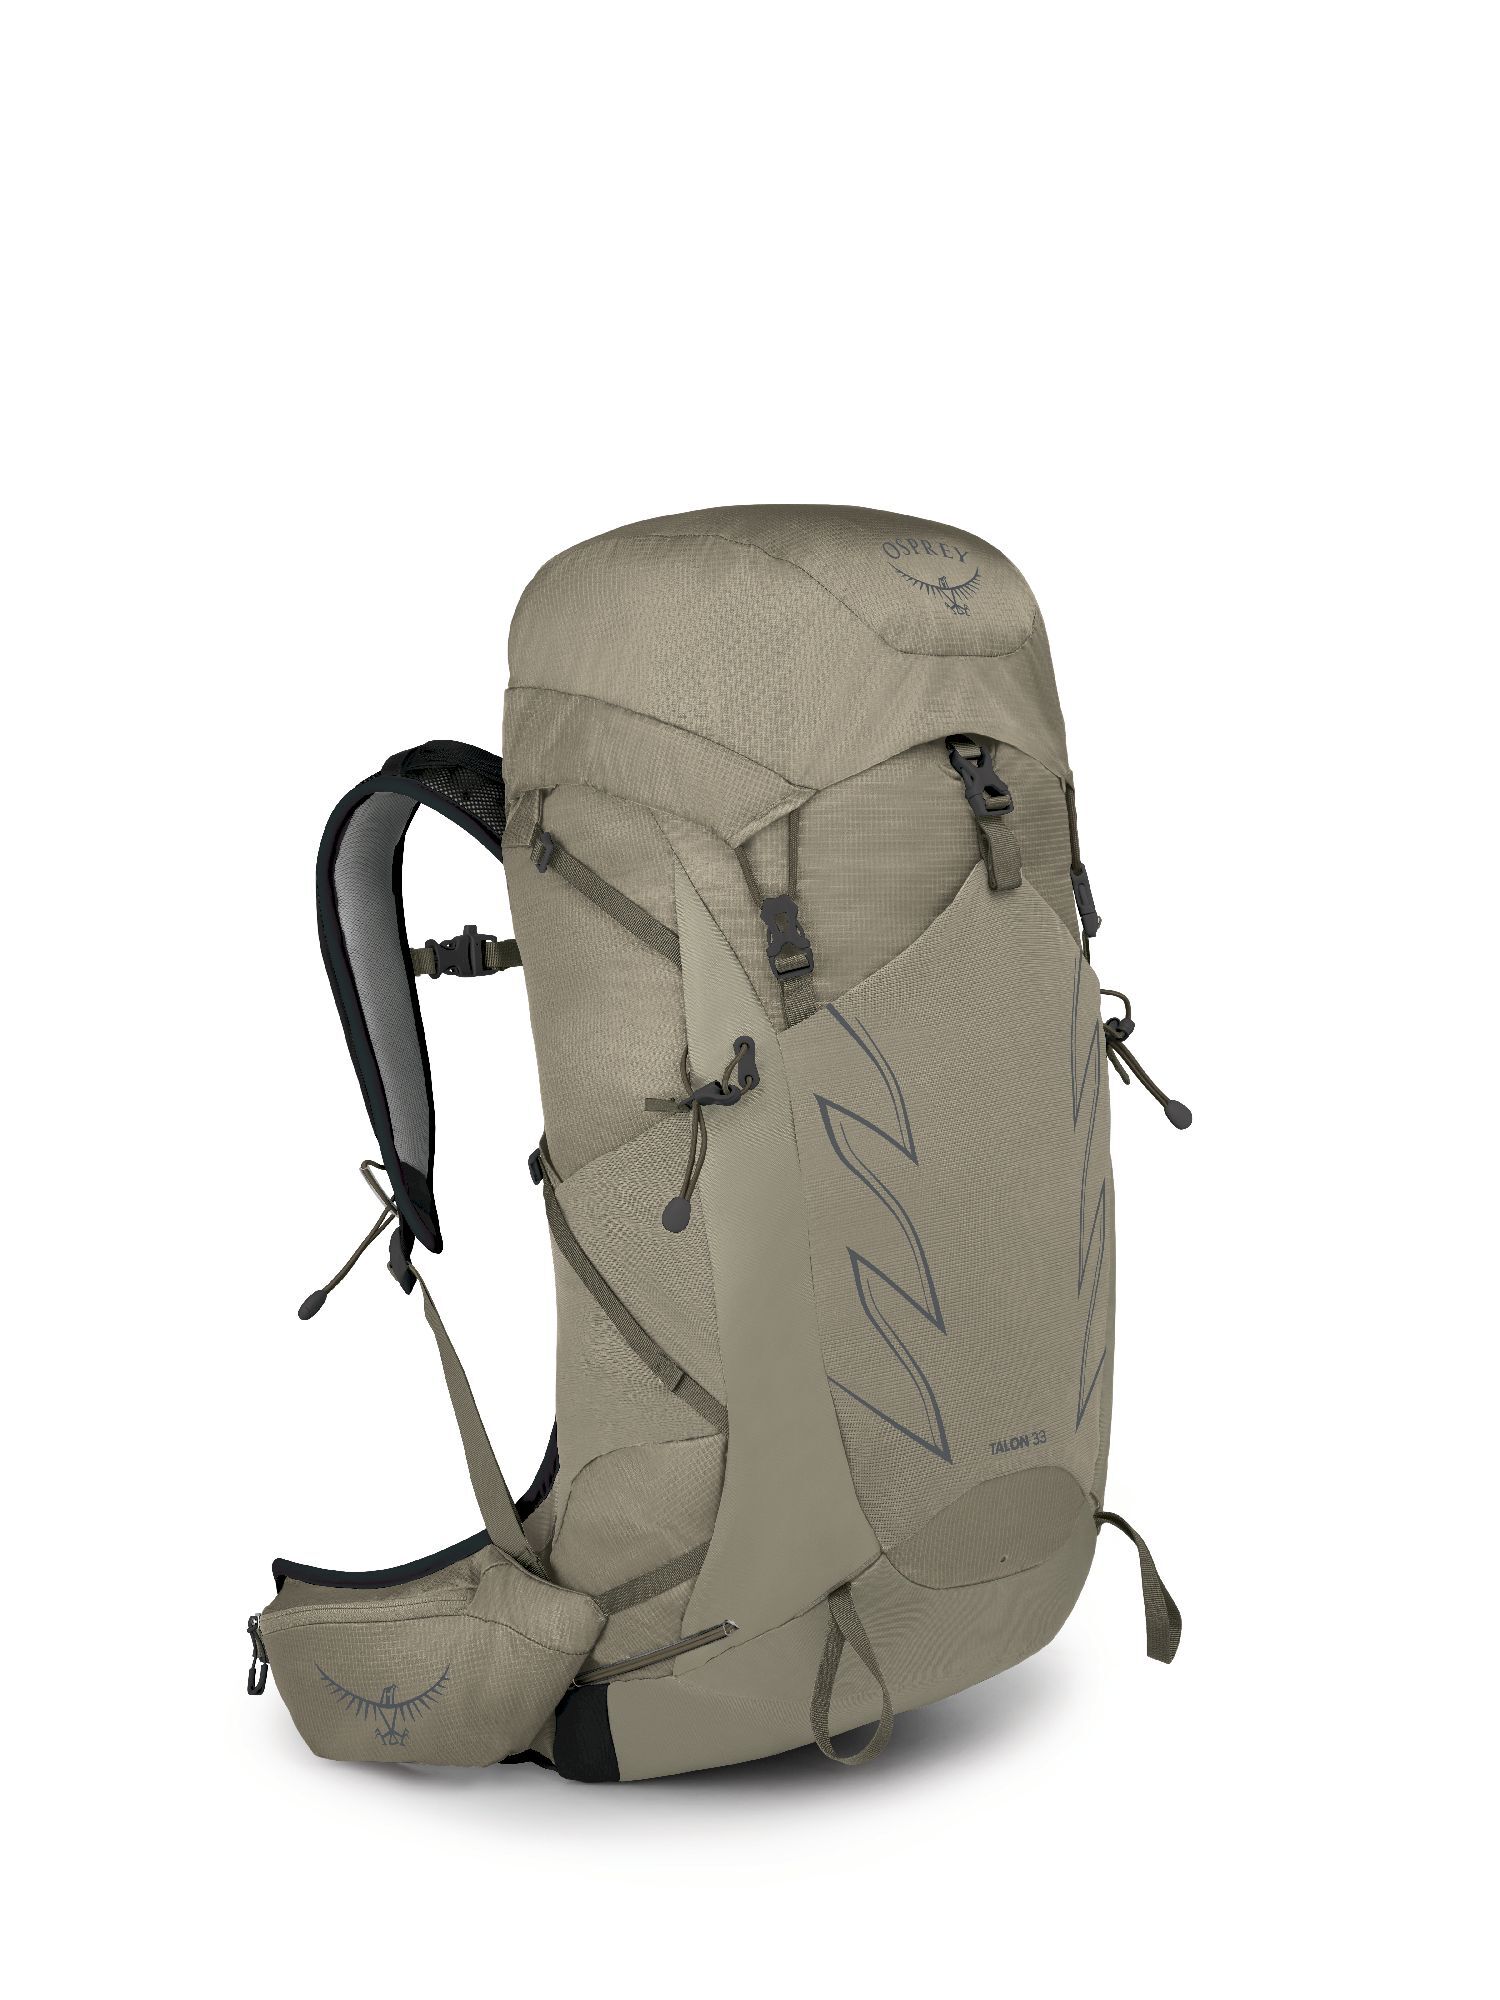 Osprey - Talon 33 - Backpack - Men's